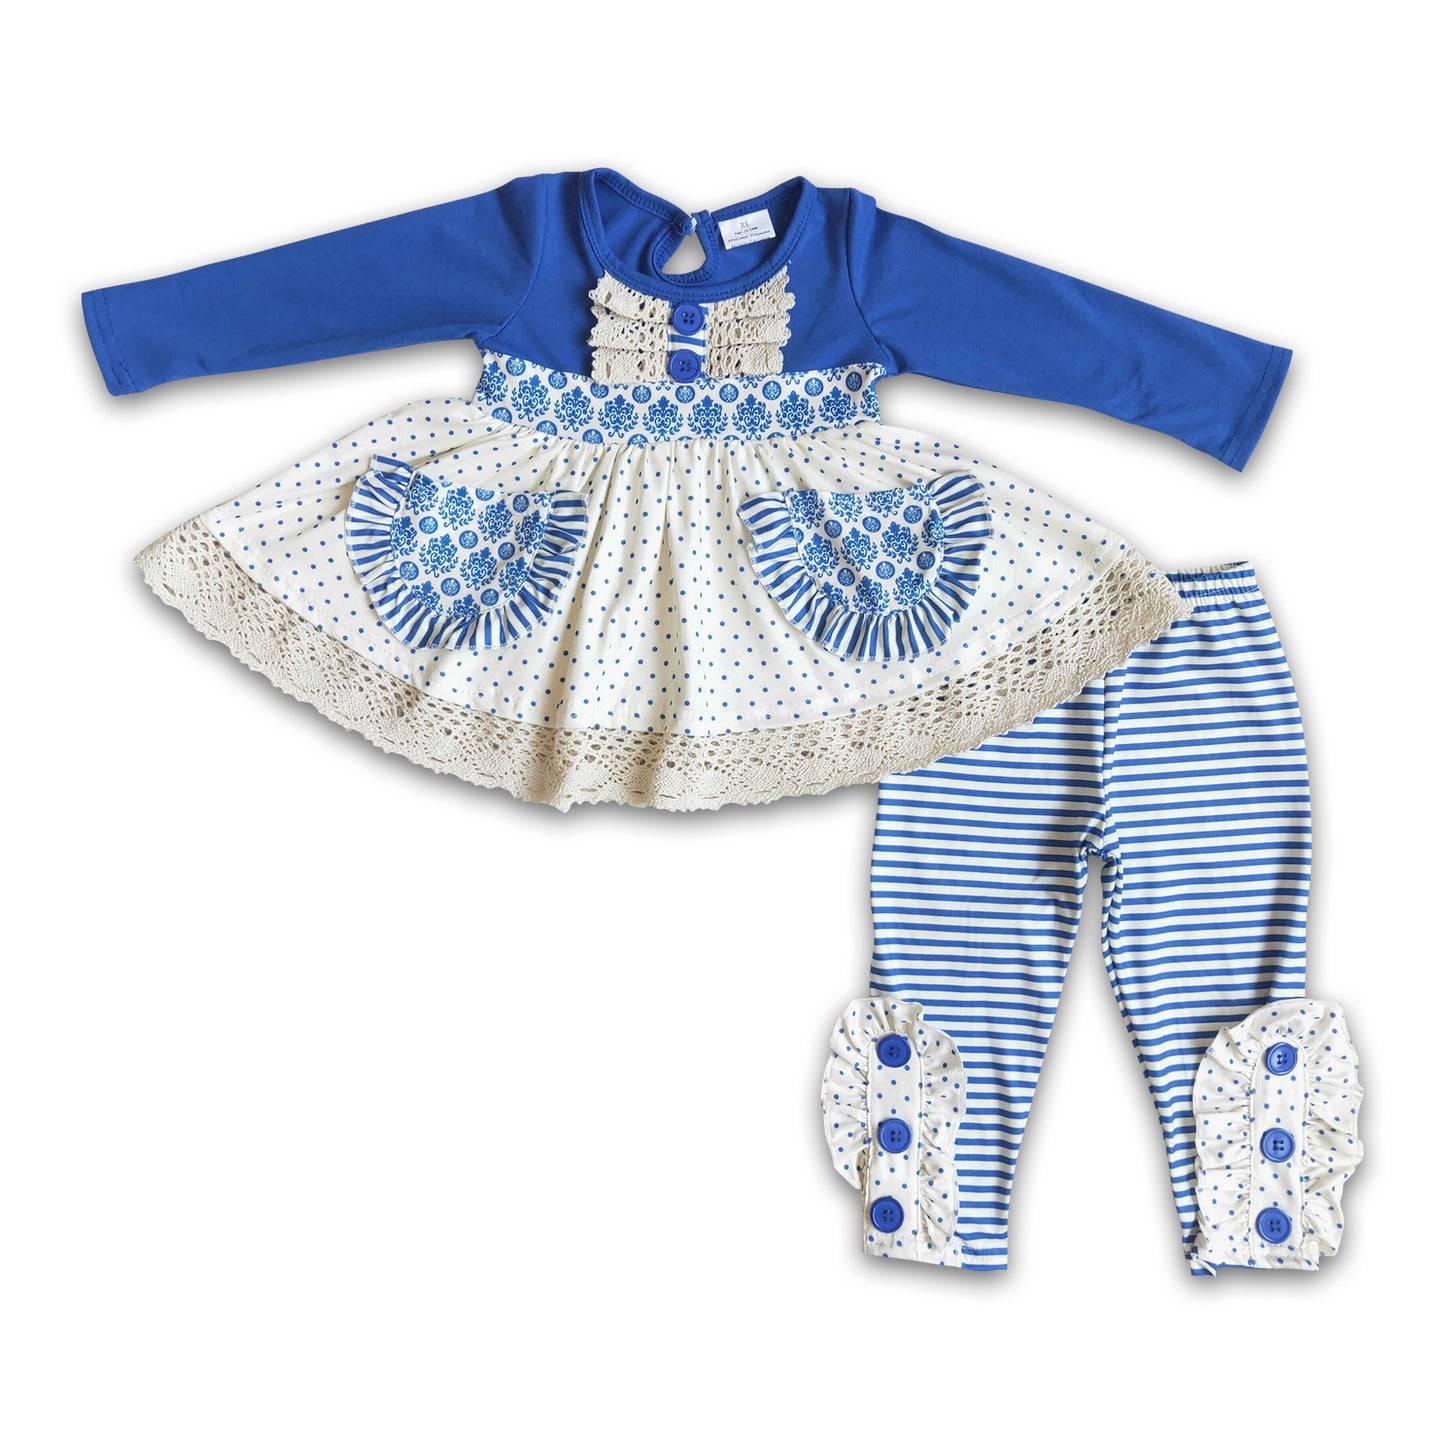 Blue pocket twirl tunic girls boutique fall clothing set